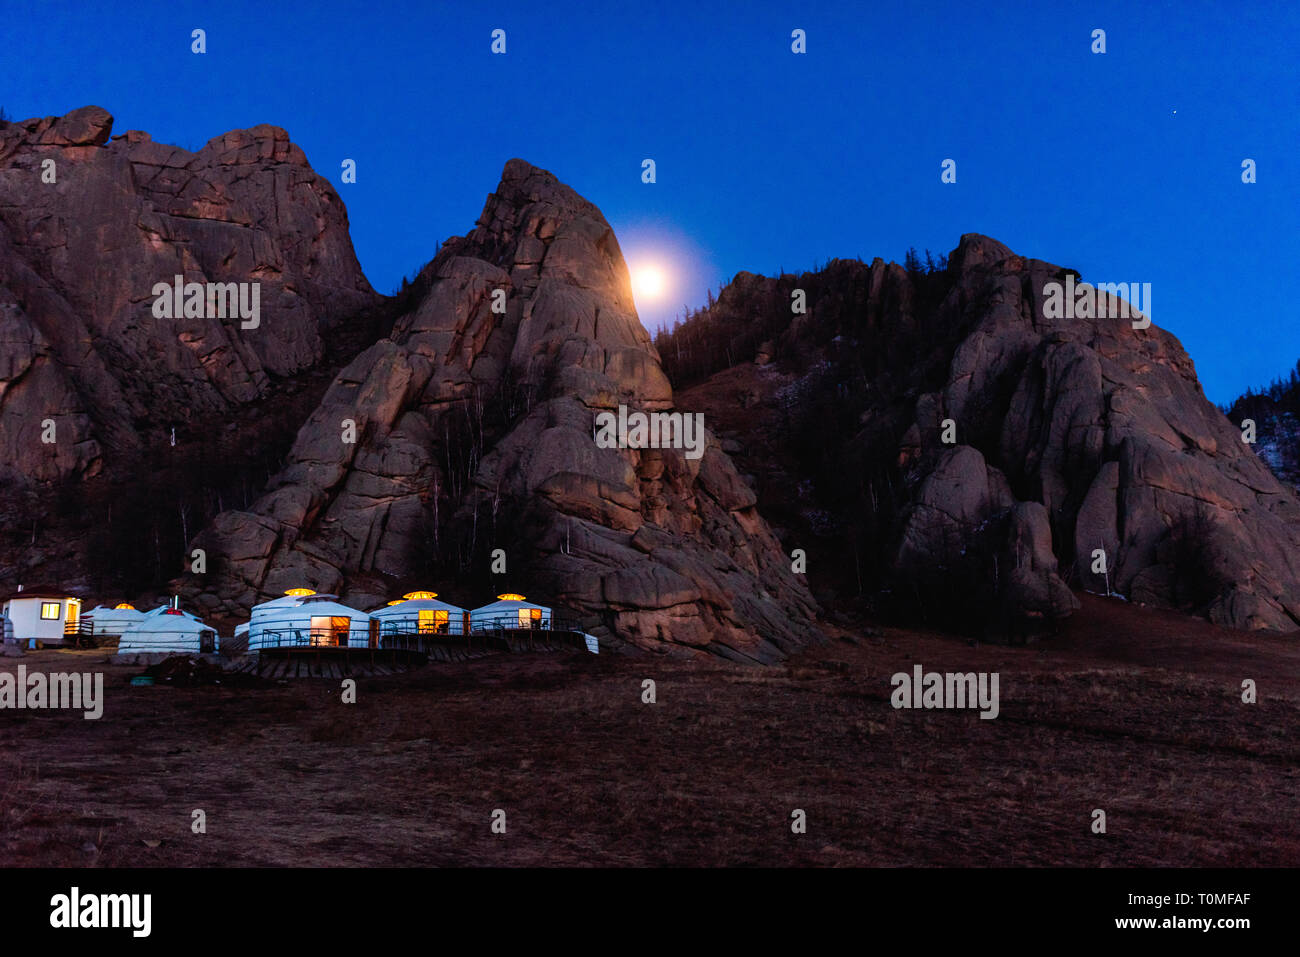 Yurts by night in Mongolian Switzerland, Mongolia Stock Photo